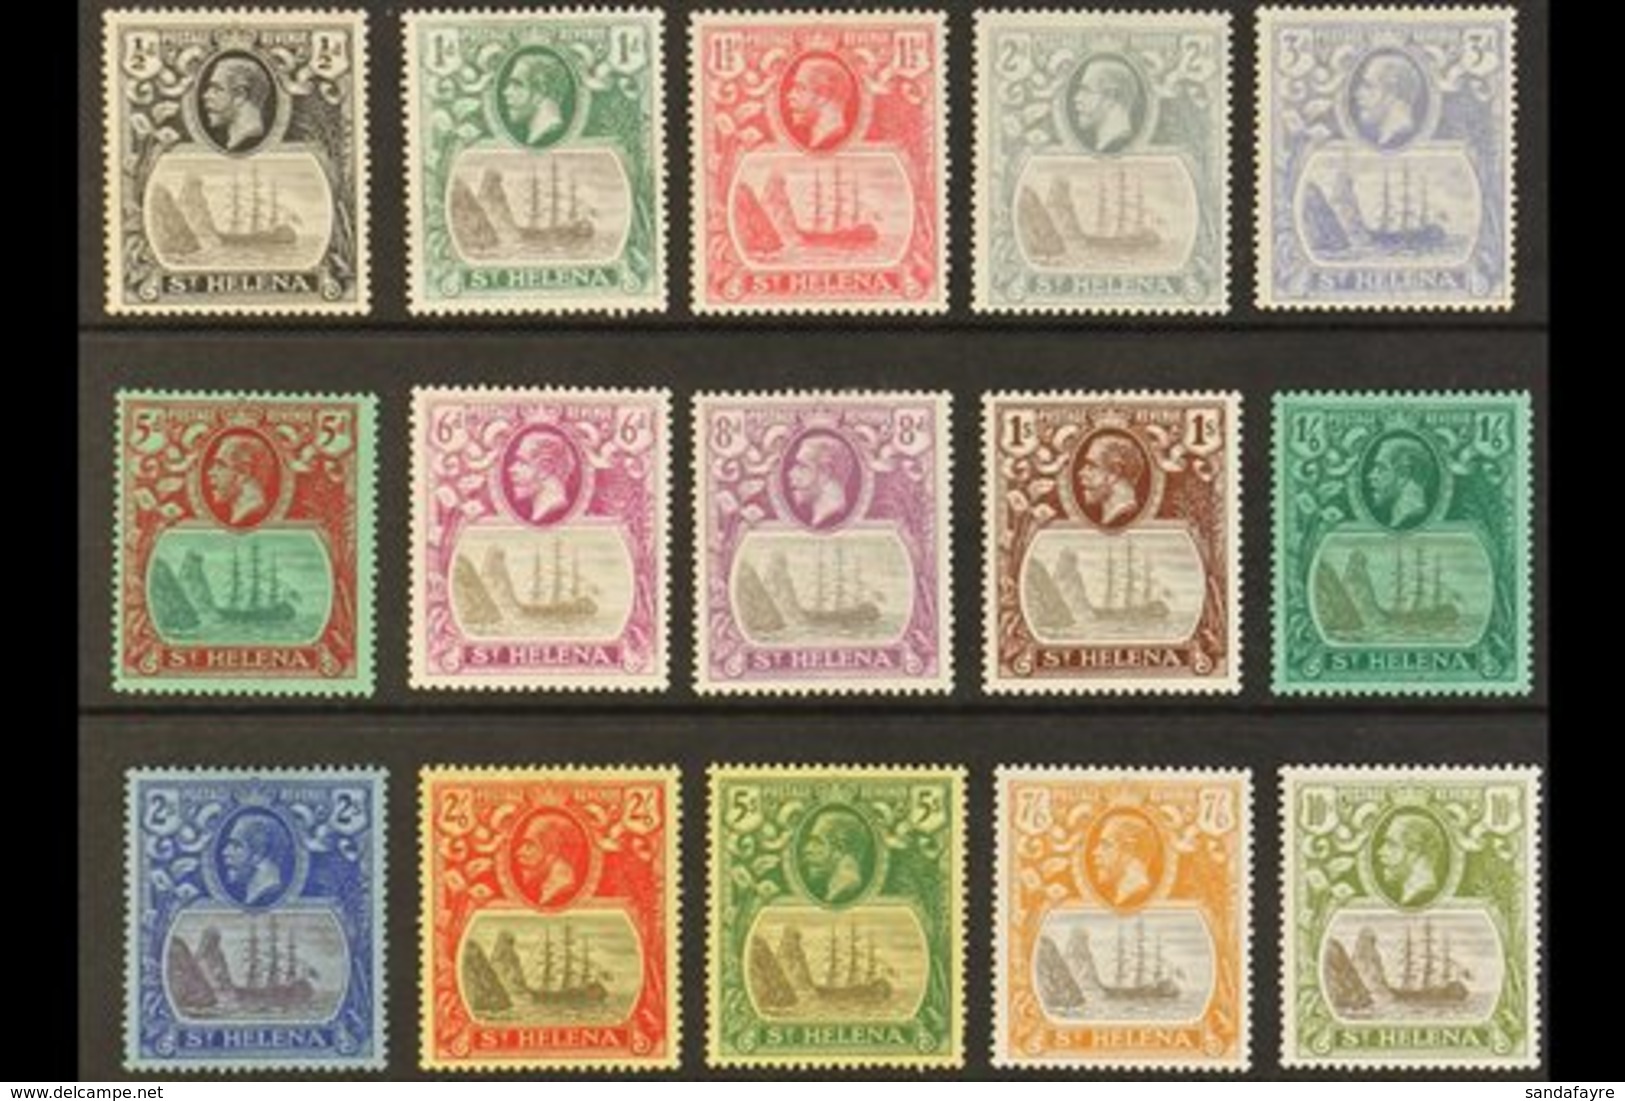 1922-37 Badge Wmk Mult Script CA Set Complete To 10s, SG 97/112, Fine Mint (15 Stamps). For More Images, Please Visit Ht - Sint-Helena